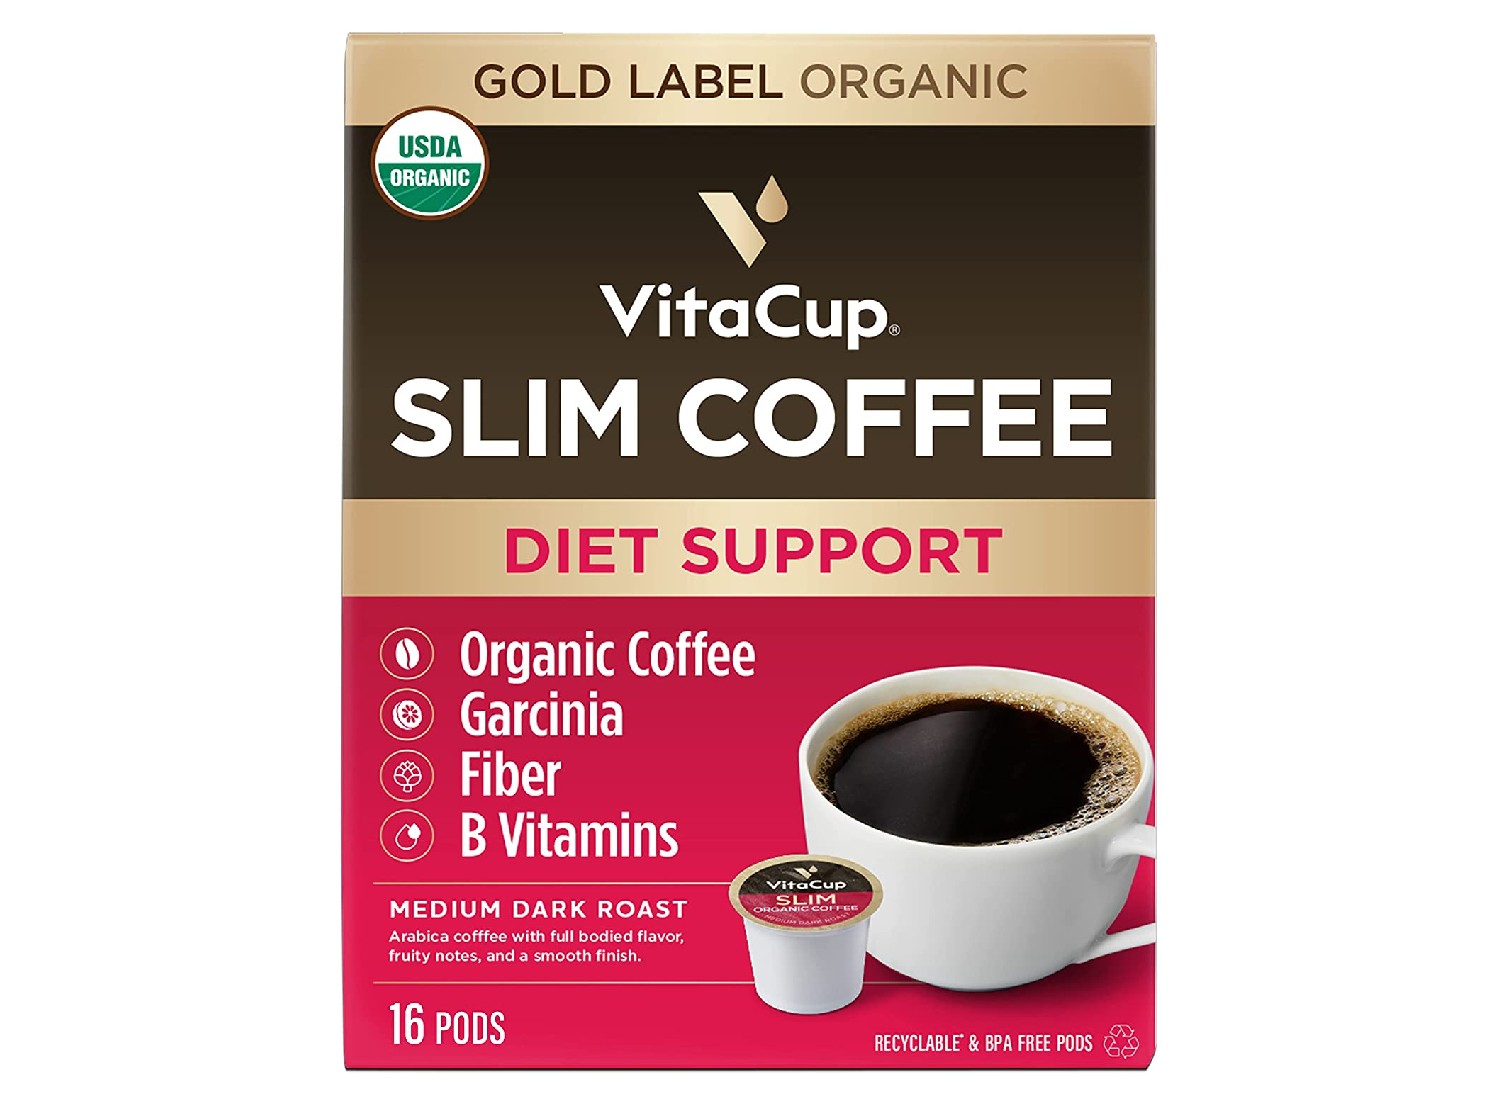 VitaCup Slim Organic Coffee Pods sold on Amazon